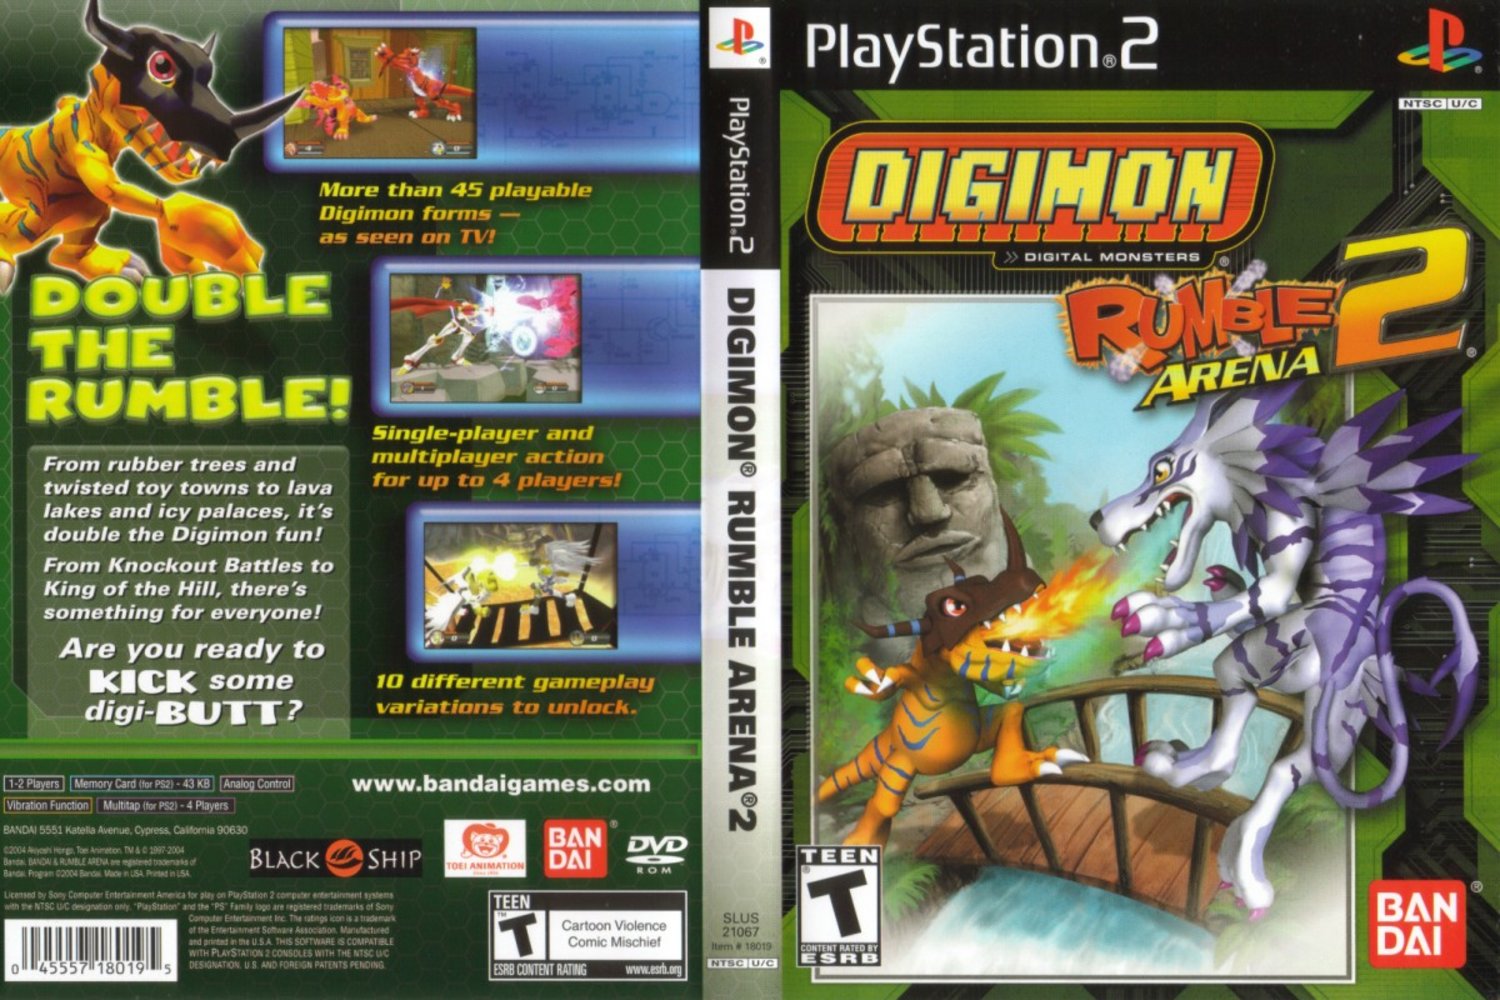 Digimon rumble arena 2